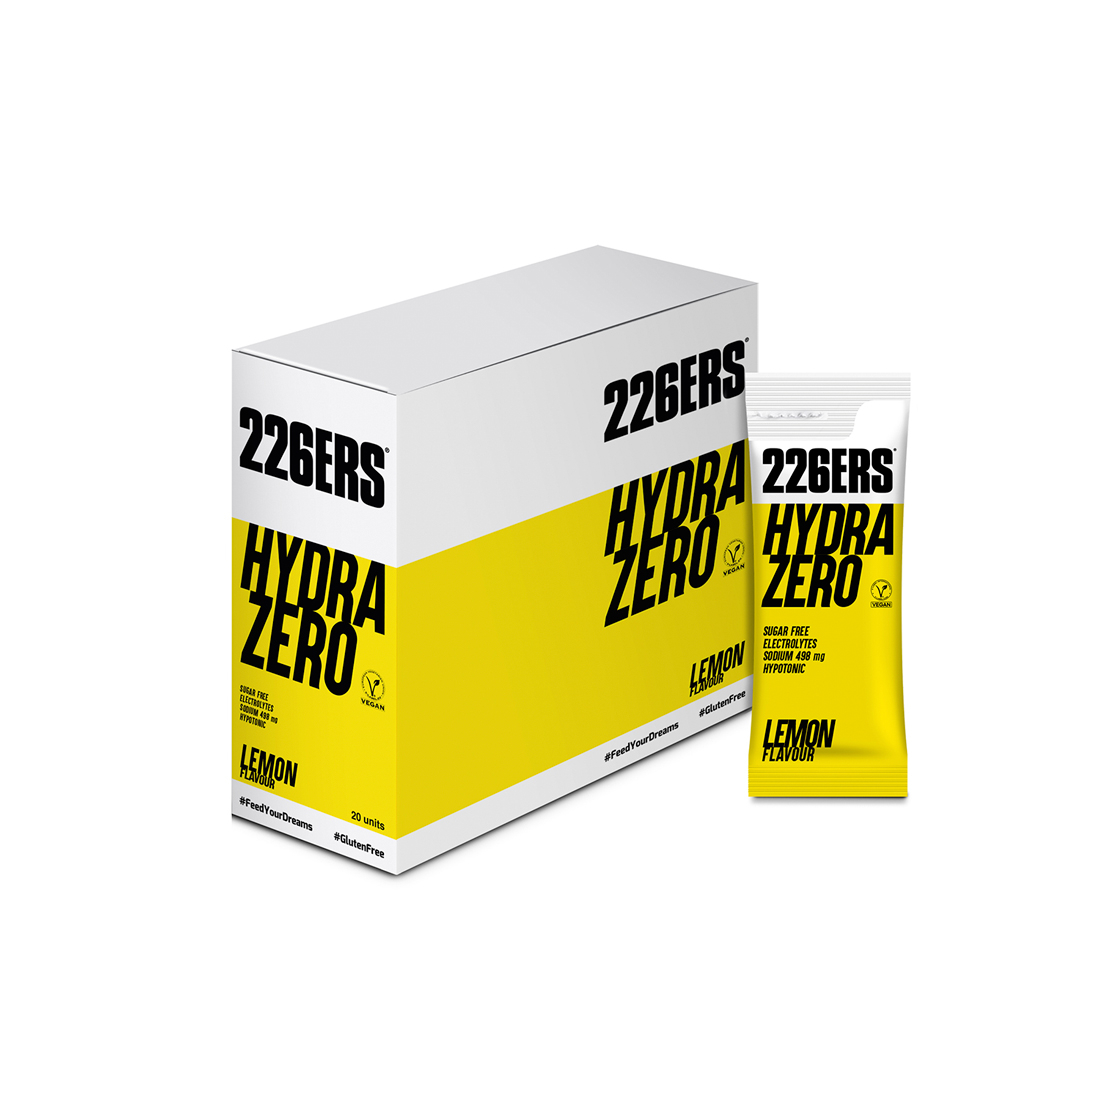 BOX – 20 STICKS HYDRAZERO